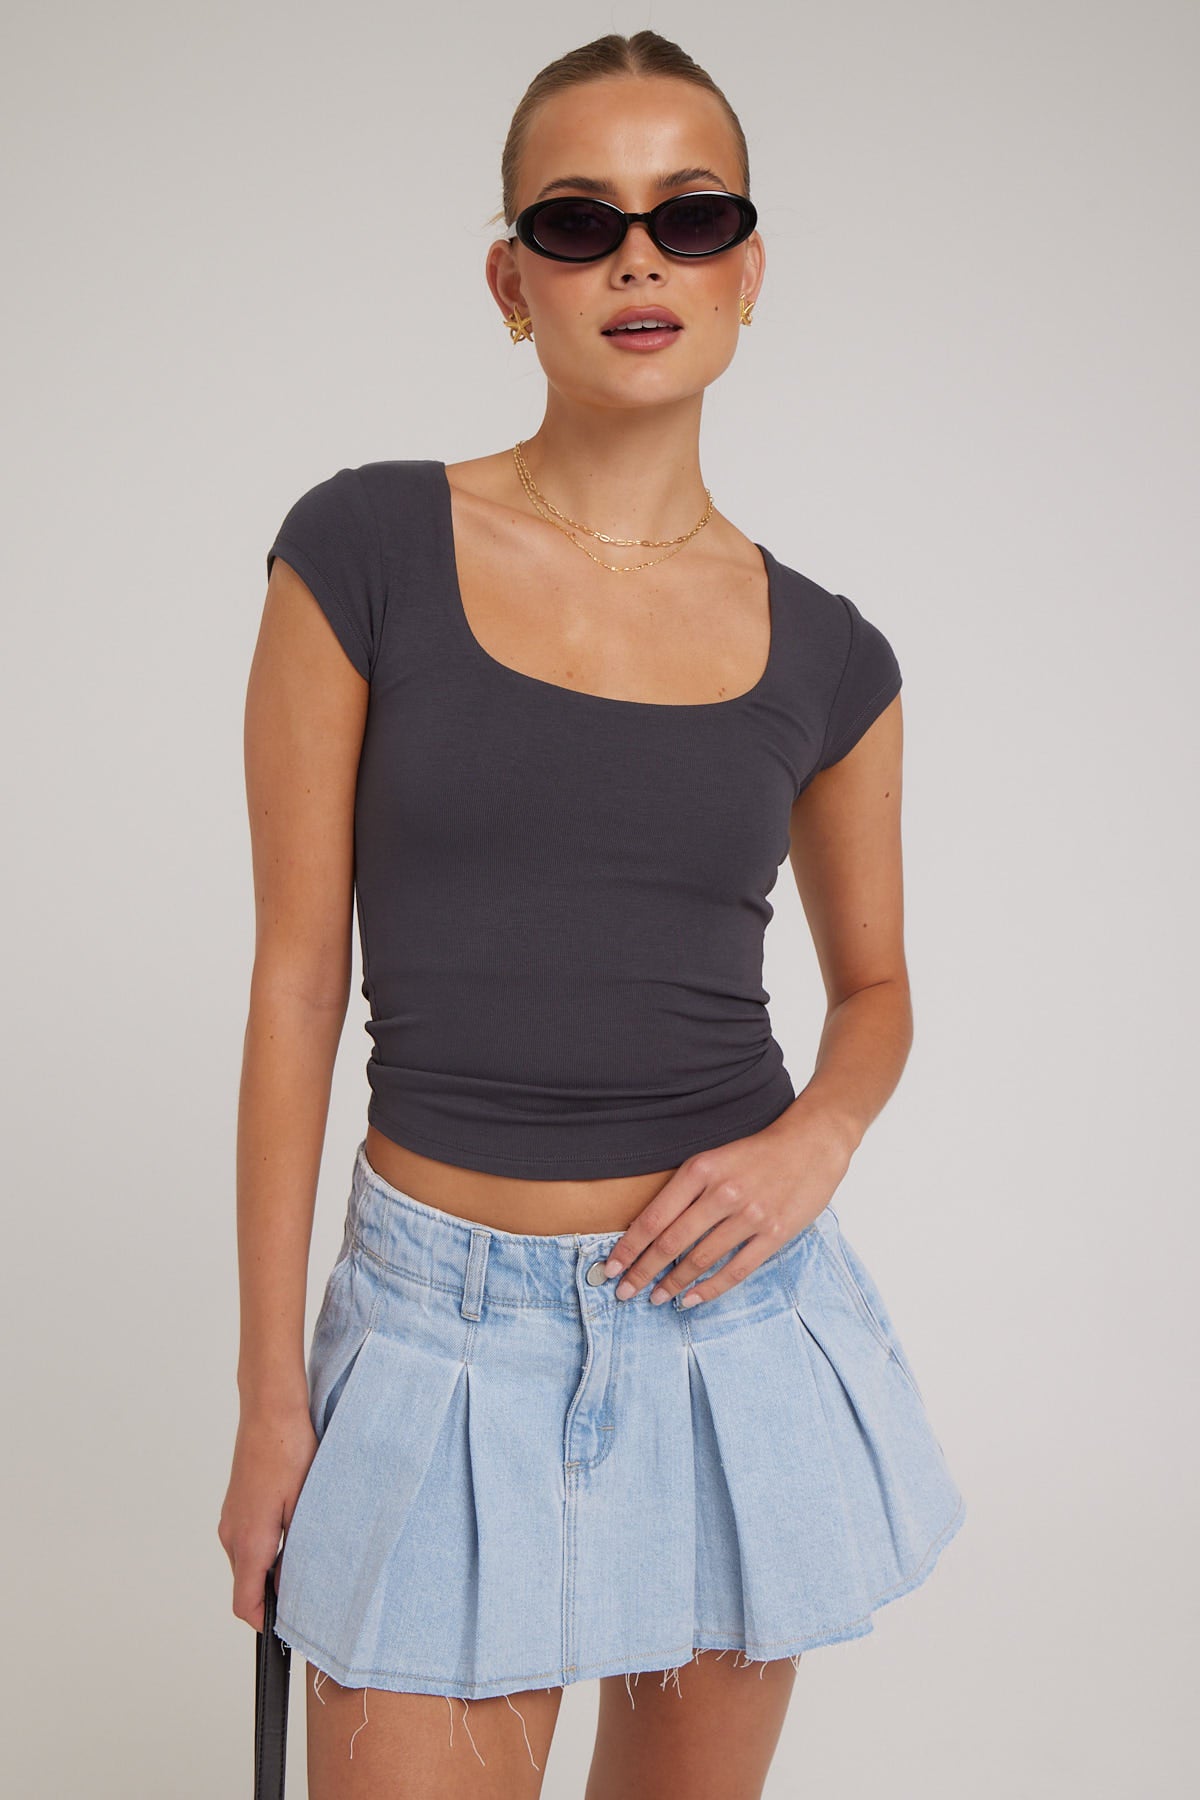 L&t Cap Sleeve Scoop T-Shirt Charcoal – Universal Store